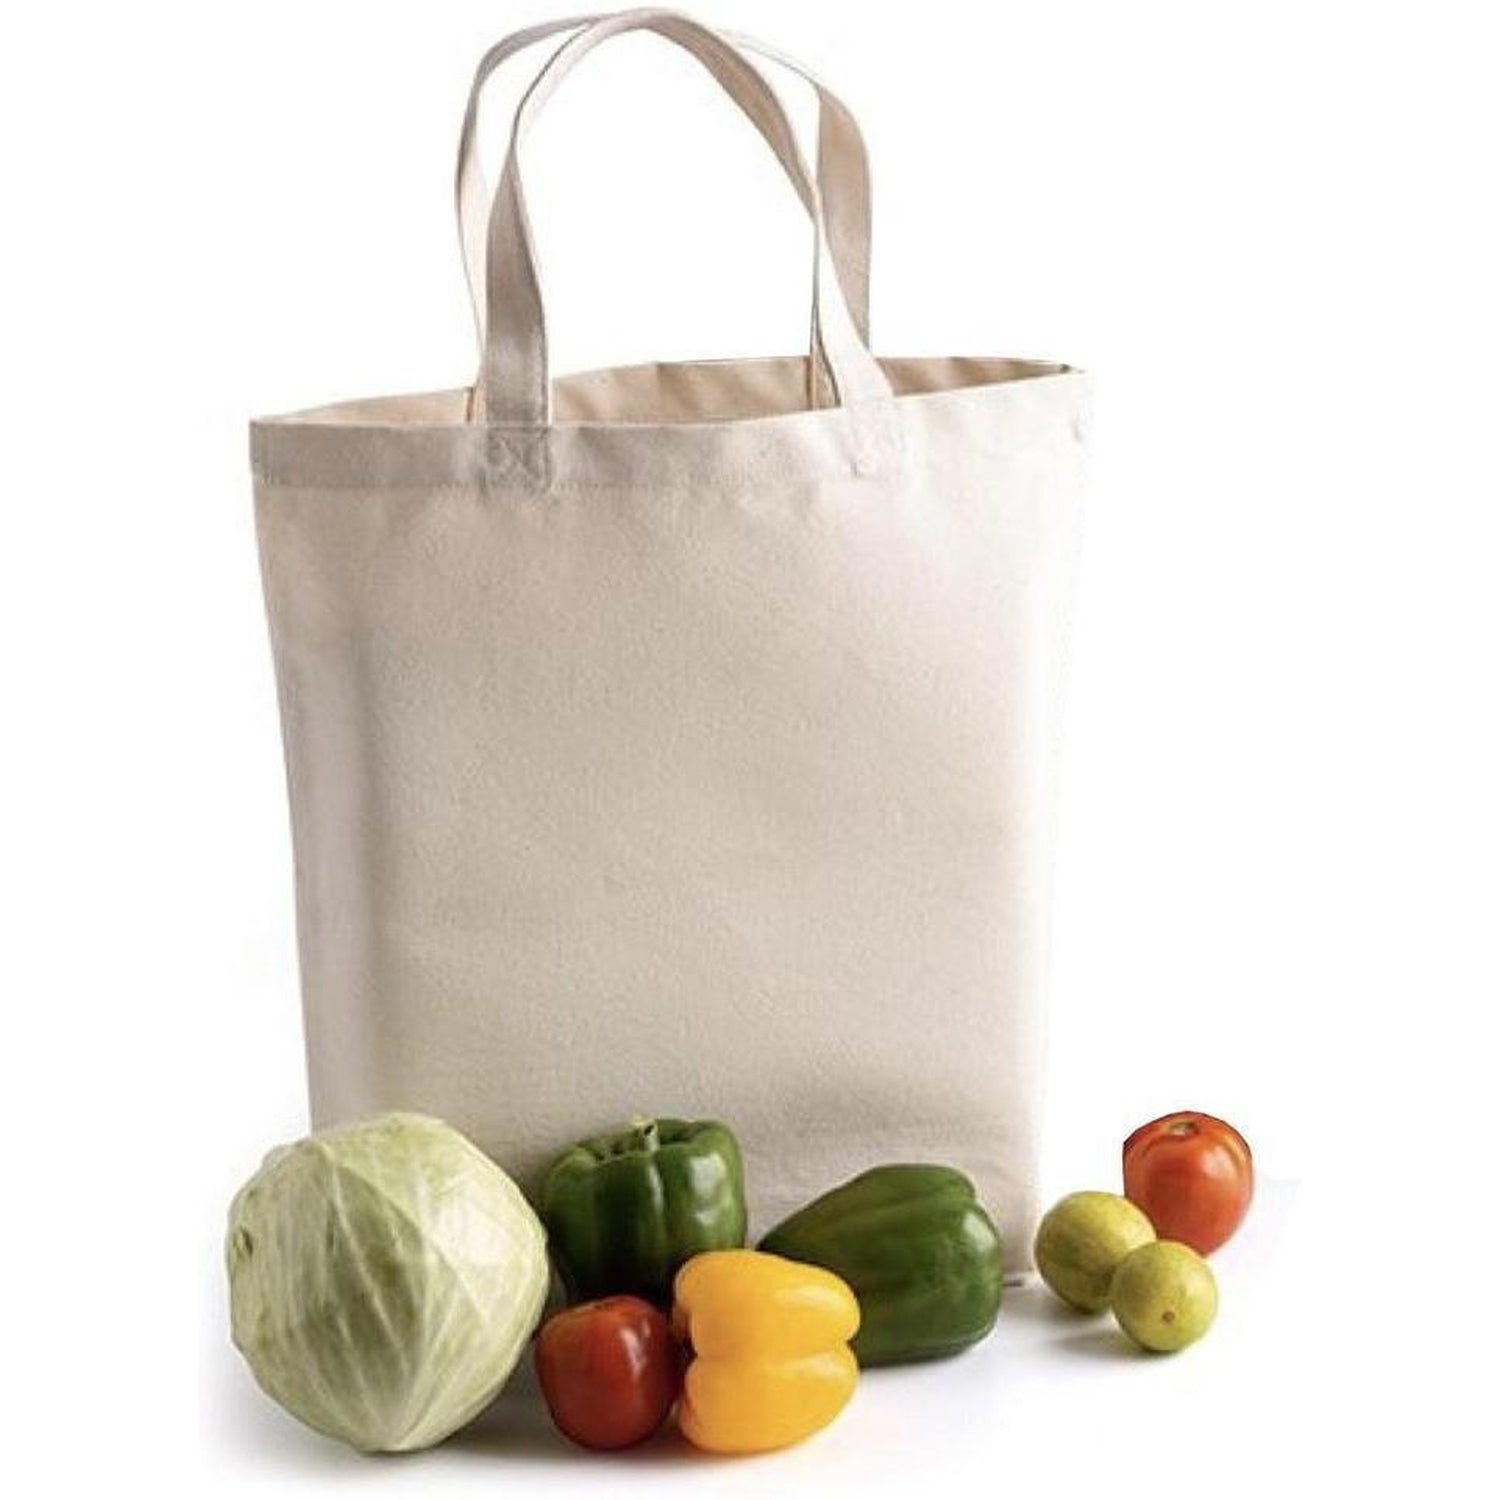 Cheap Tote Bags, Cotton Bags in Bulk, Wholesale Tote Bags – BagzDepot™